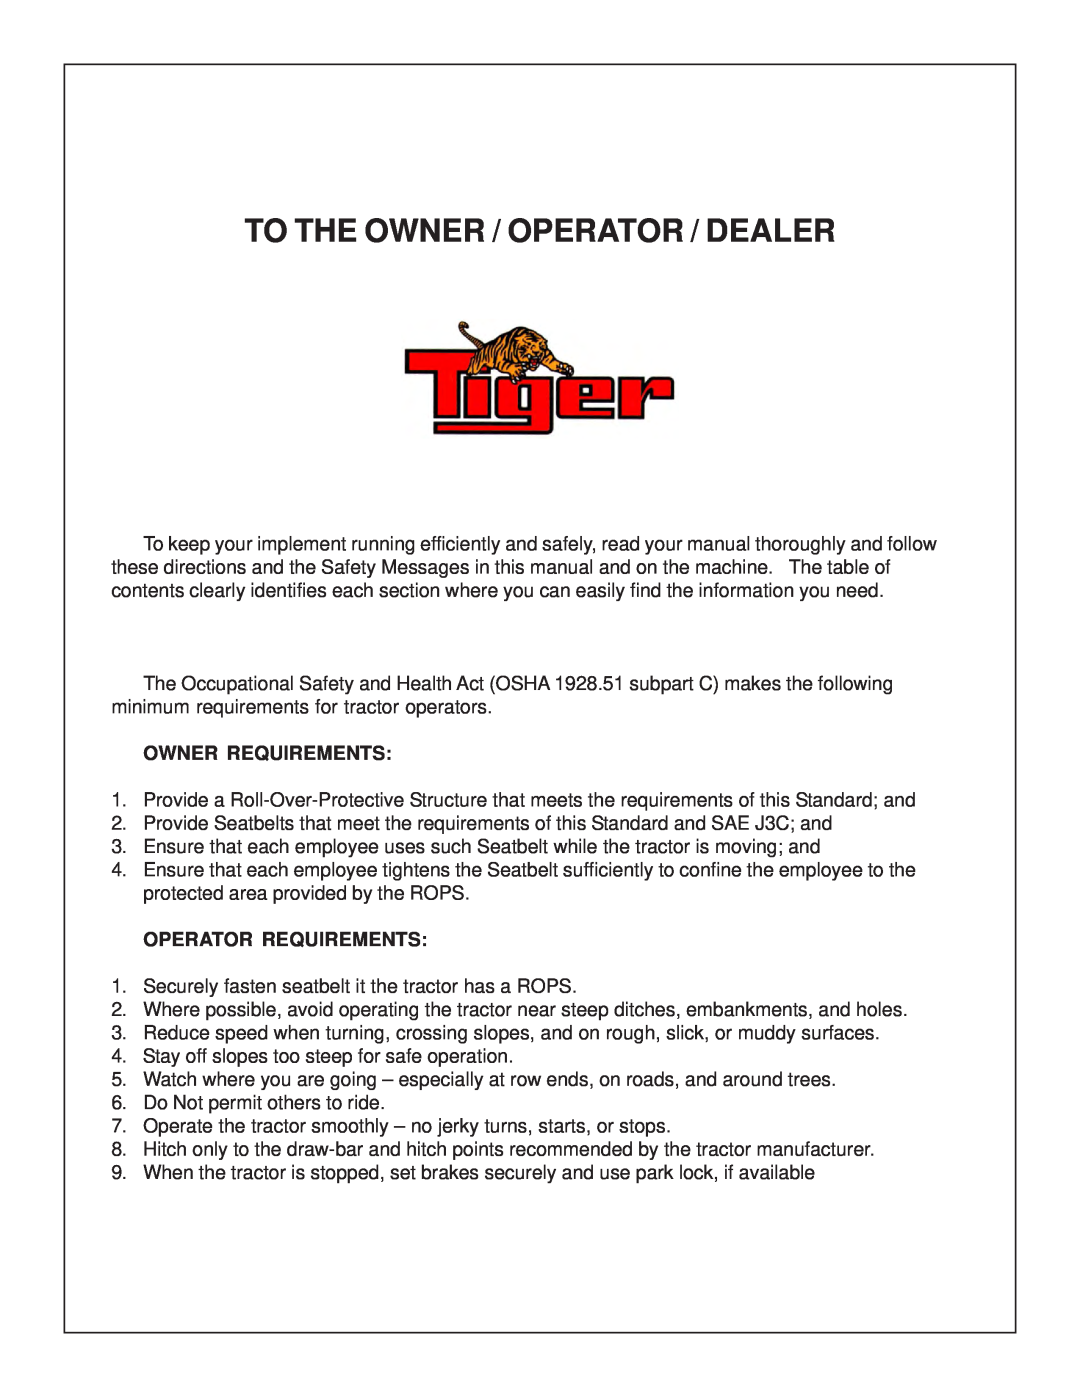 Tiger JD 62-6420 manual To The Owner / Operator / Dealer, Owner Requirements, Operator Requirements 